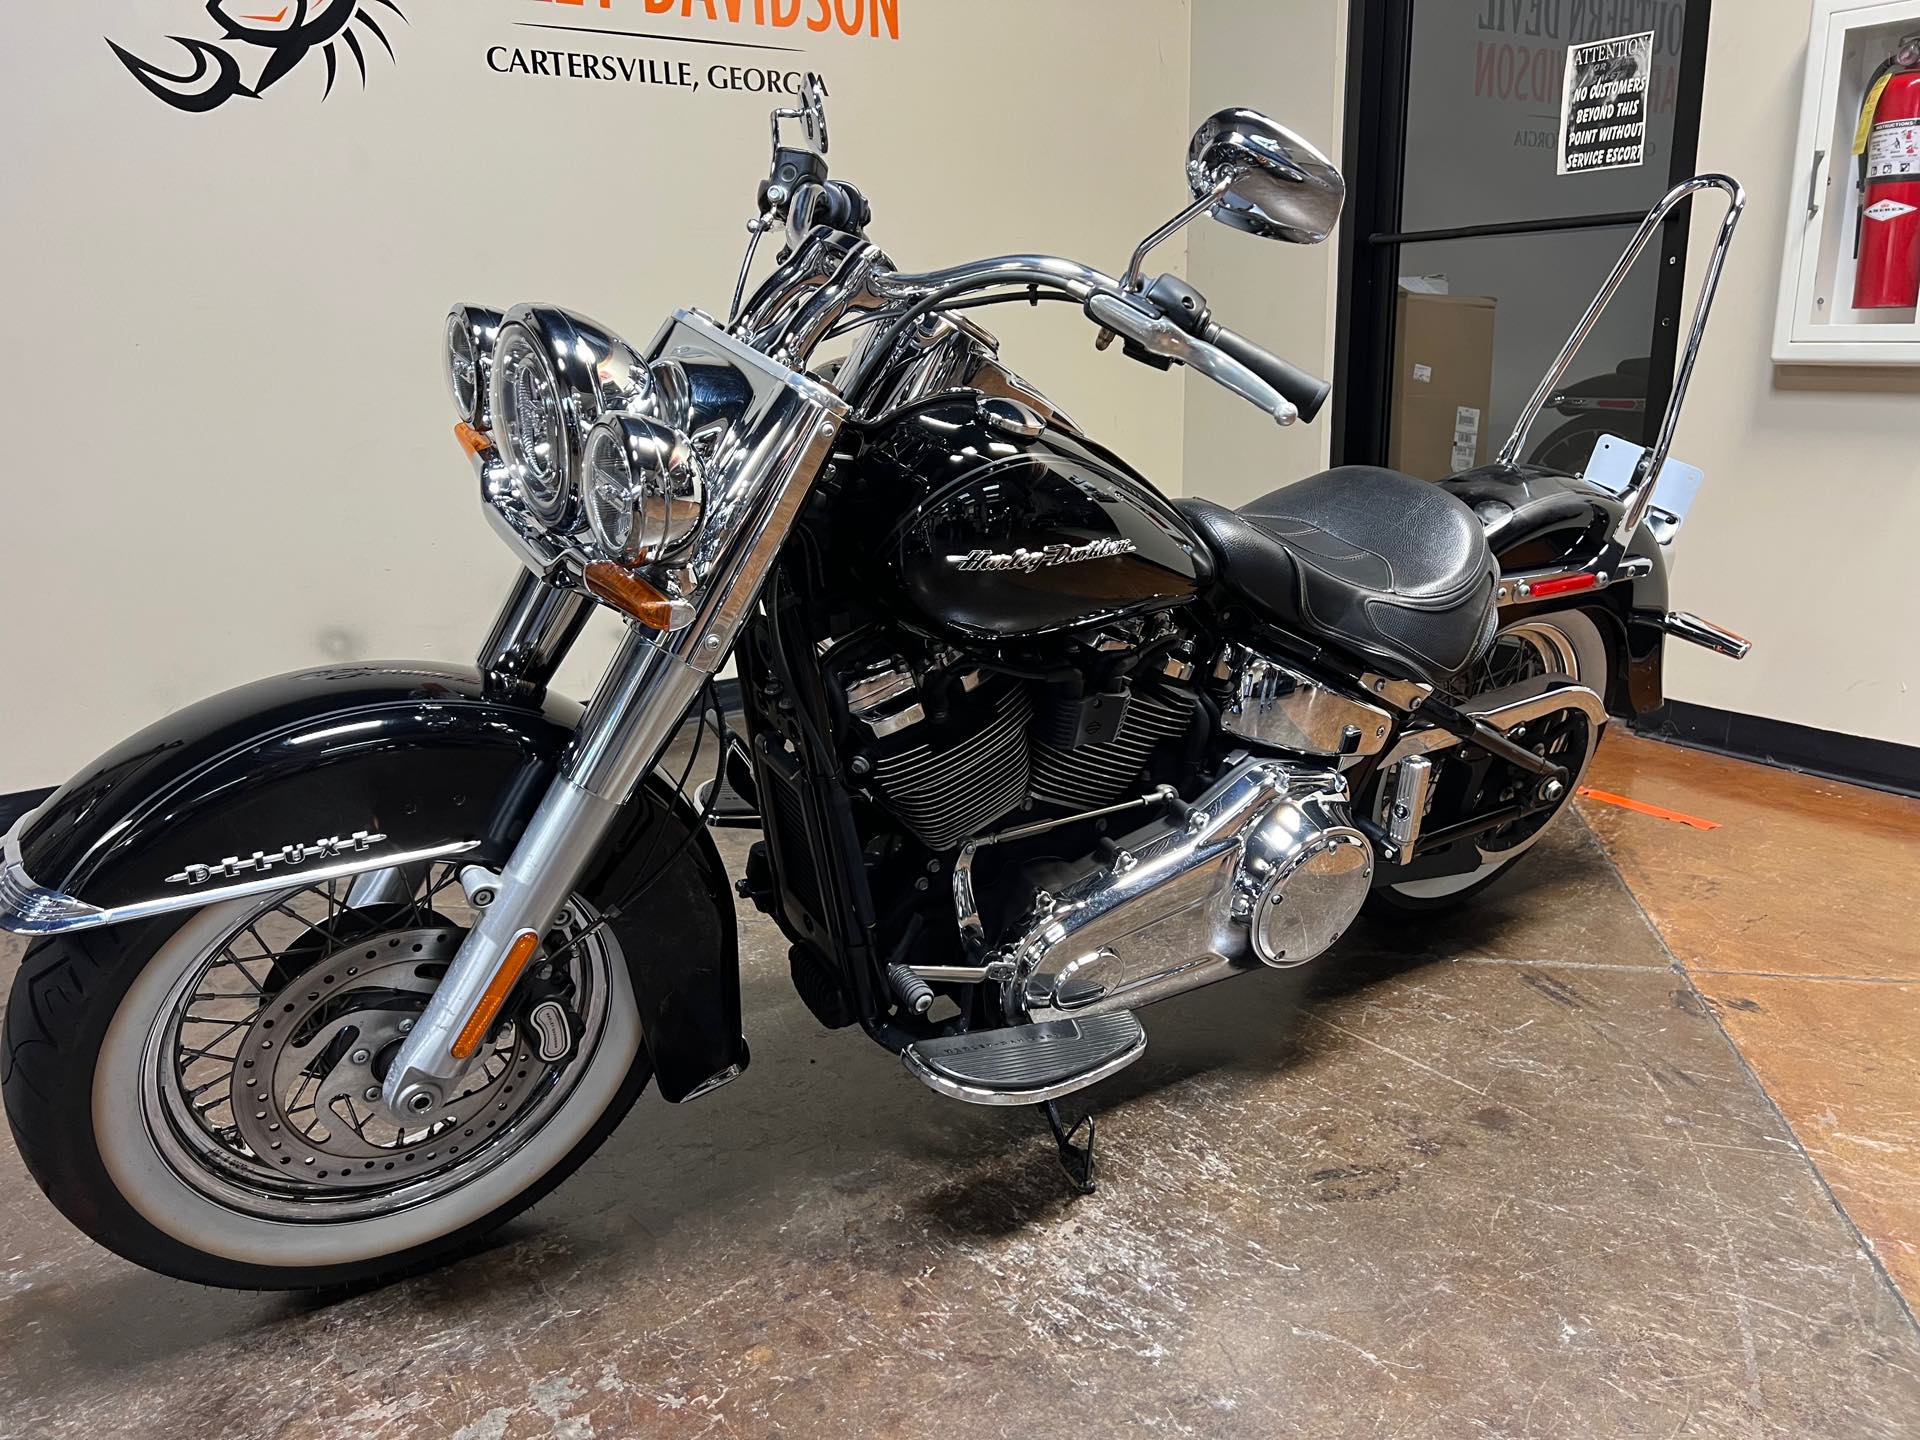 2018 Harley-Davidson Softail Deluxe at Southern Devil Harley-Davidson